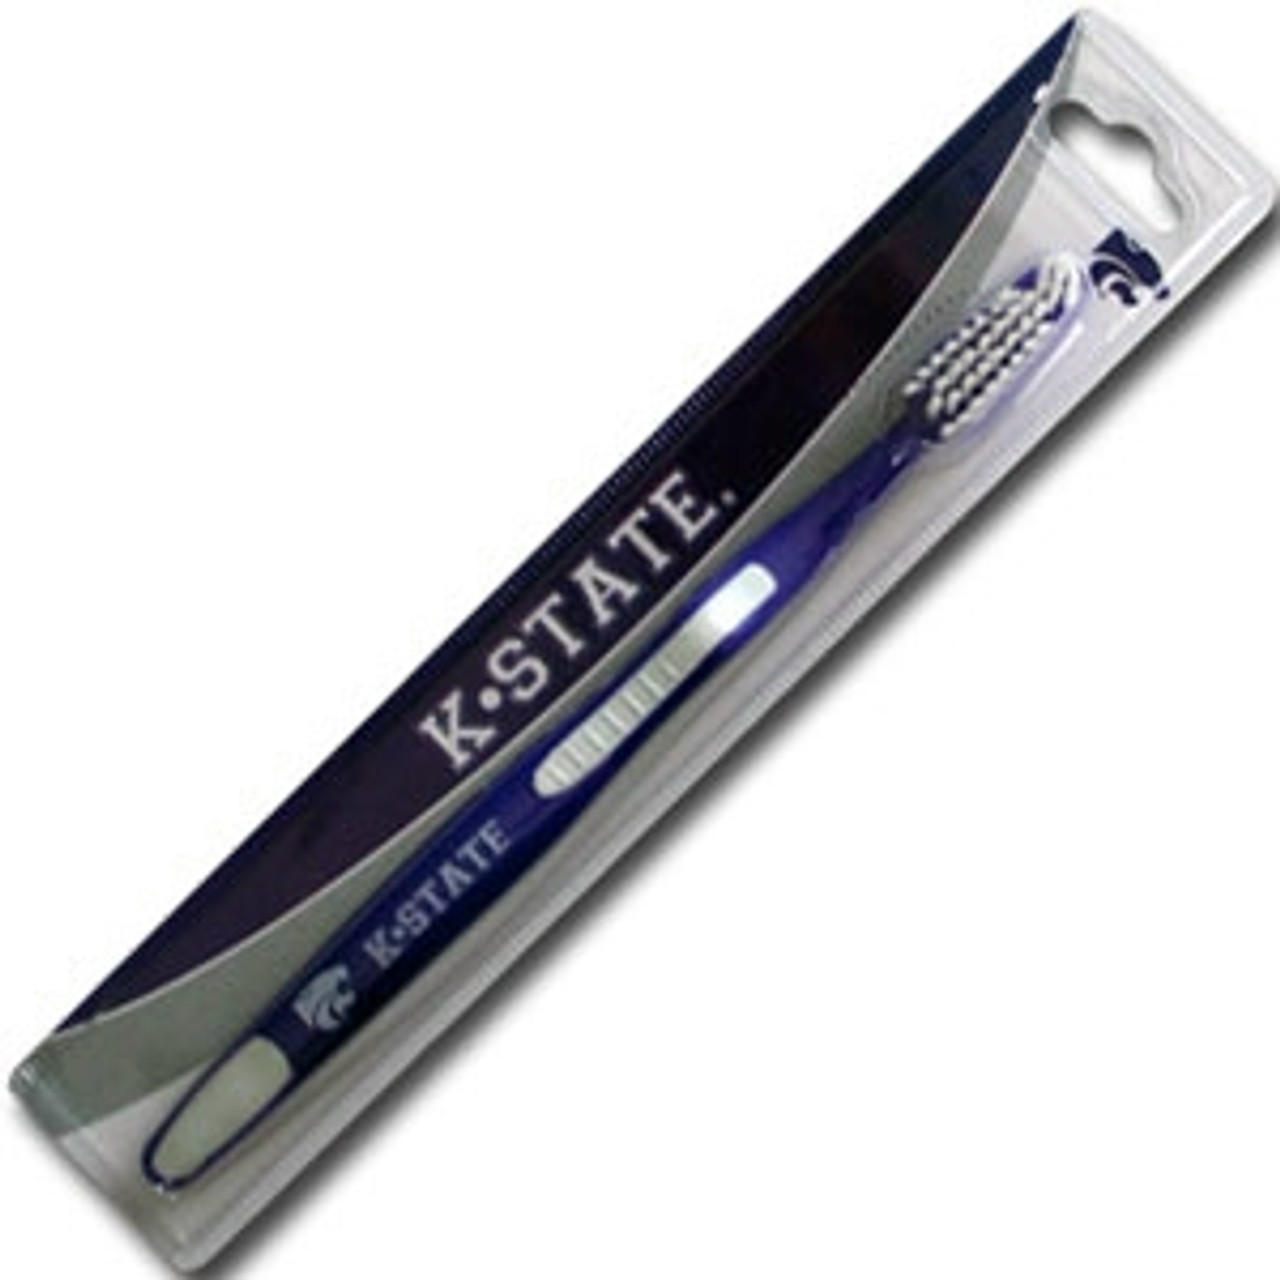 Siskiyou Kansas State Wildcats Toothbrush